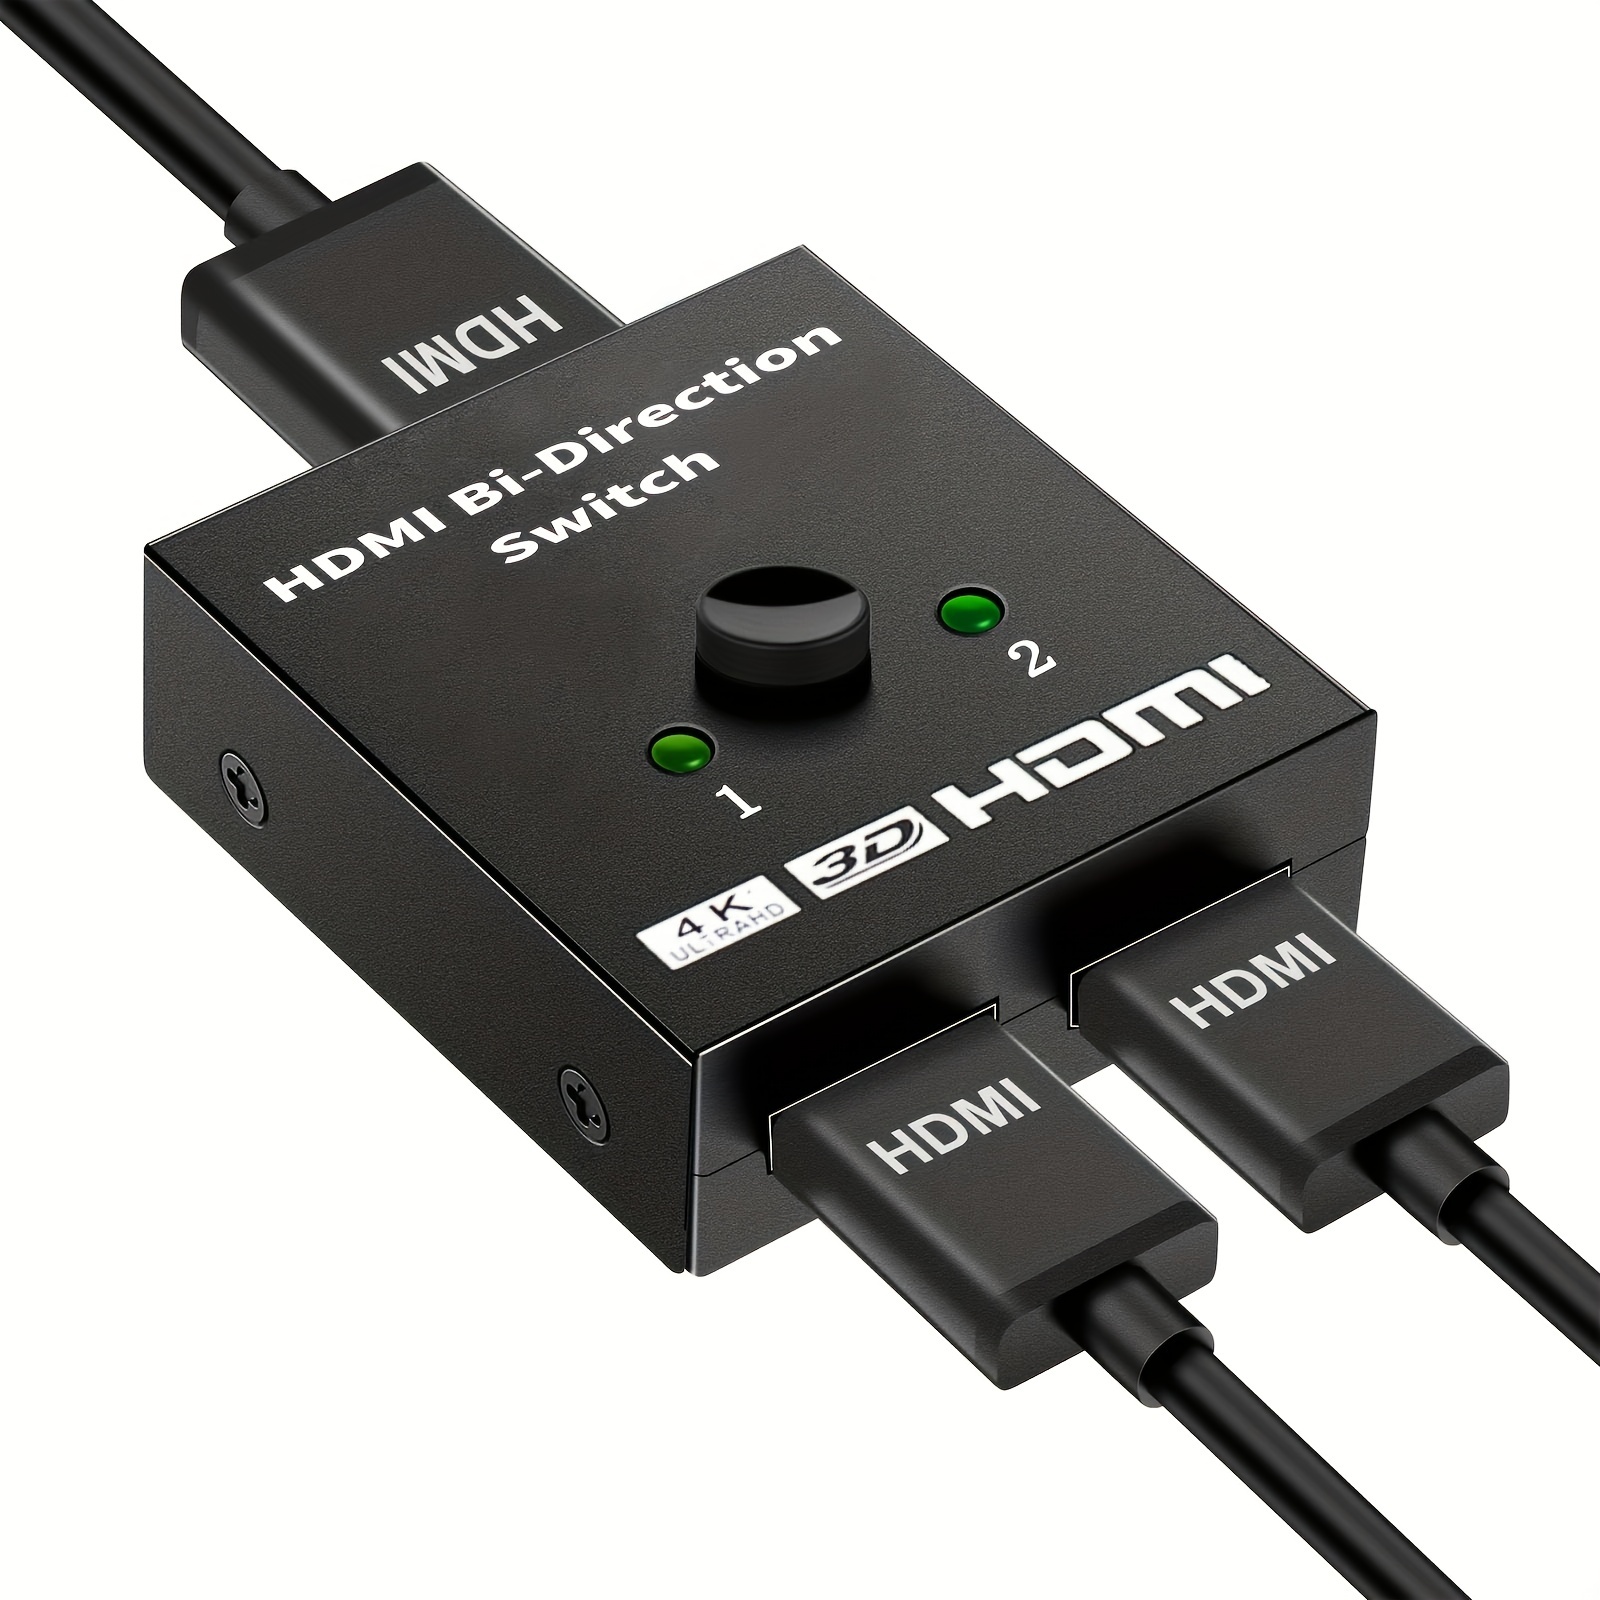 Interruptor HDMI 3 en 1 salida 4K a 60Hz aleación de aluminio 【con cable  HDMI 2.0 de 4 pies】: avedio links 3x1 HDMI Multi Port Switcher, selector  HDMI de 3 vías compatible